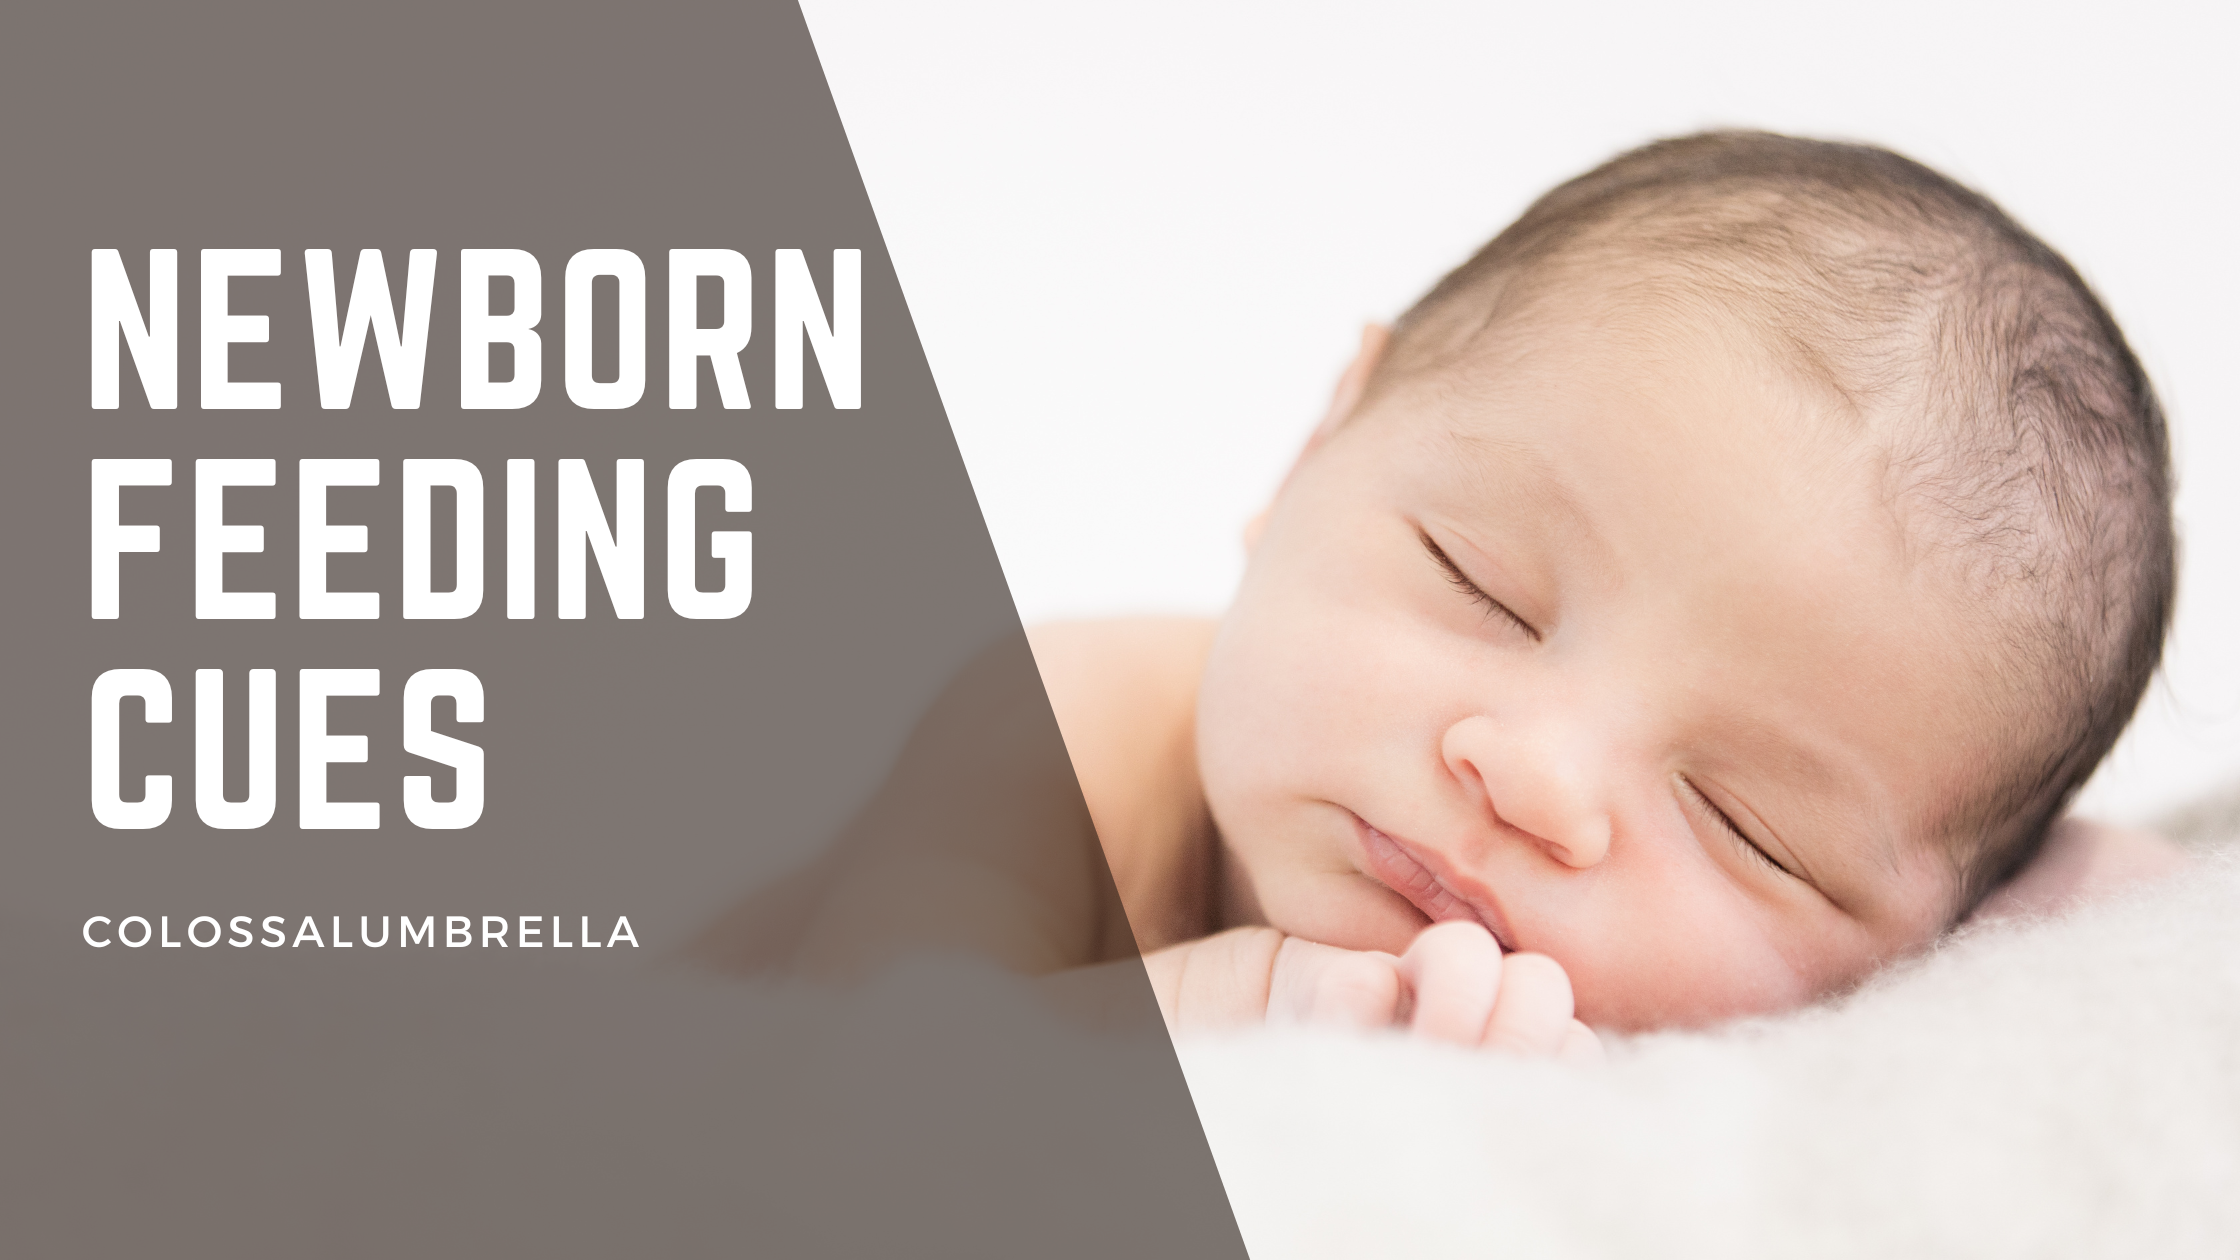 Easy to recognize Newborn feeding cues